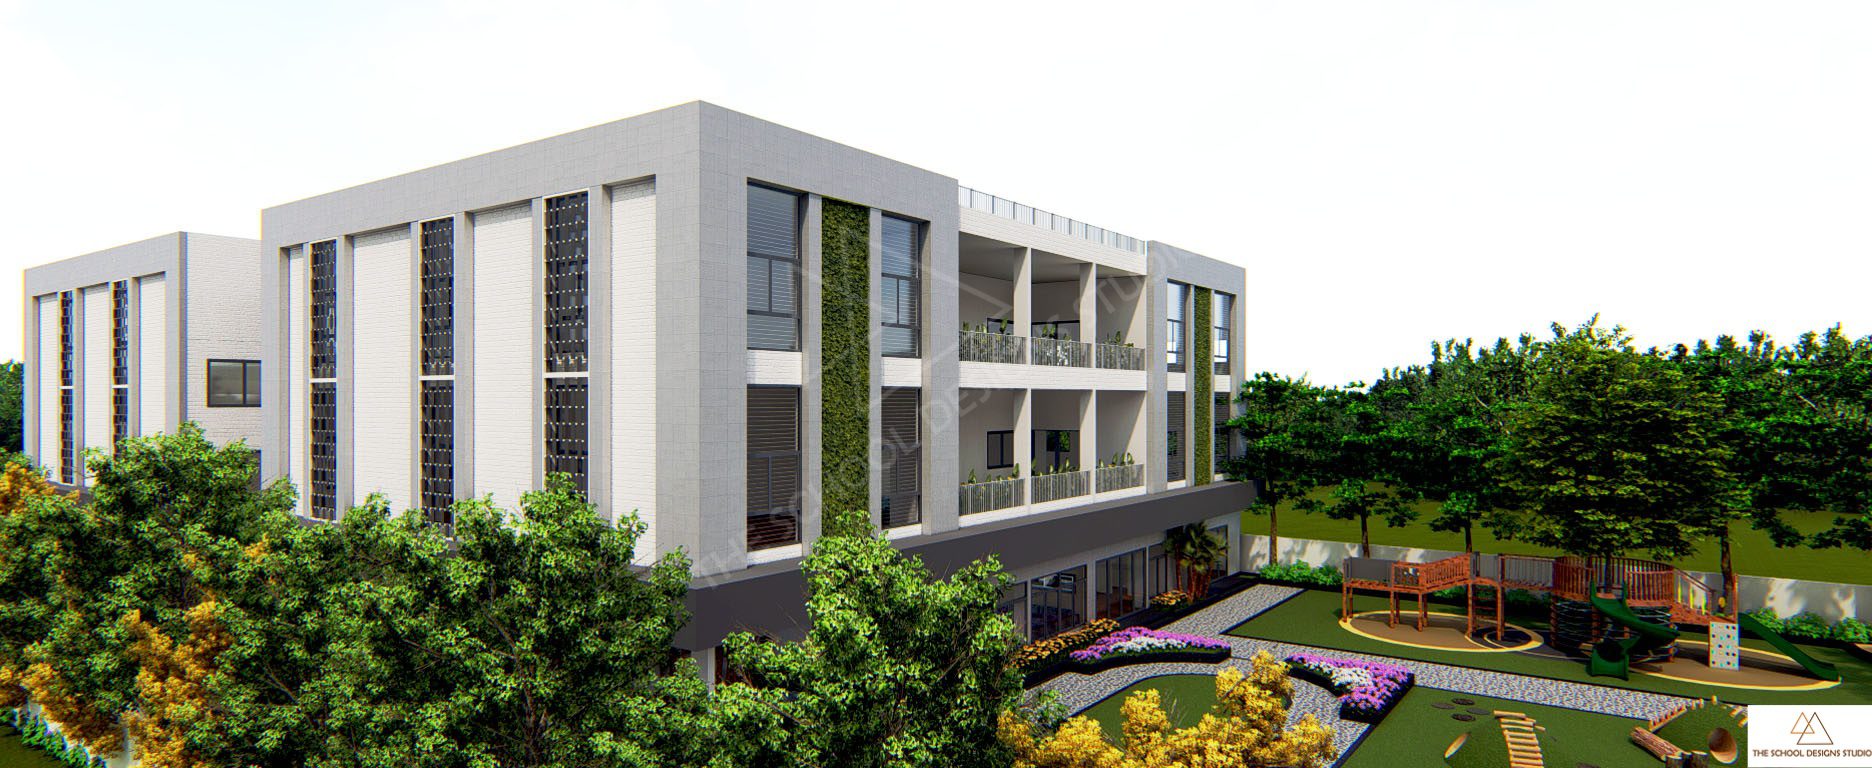 Vidyan International School, Bengaluru. Design Created by The School Designs Studio